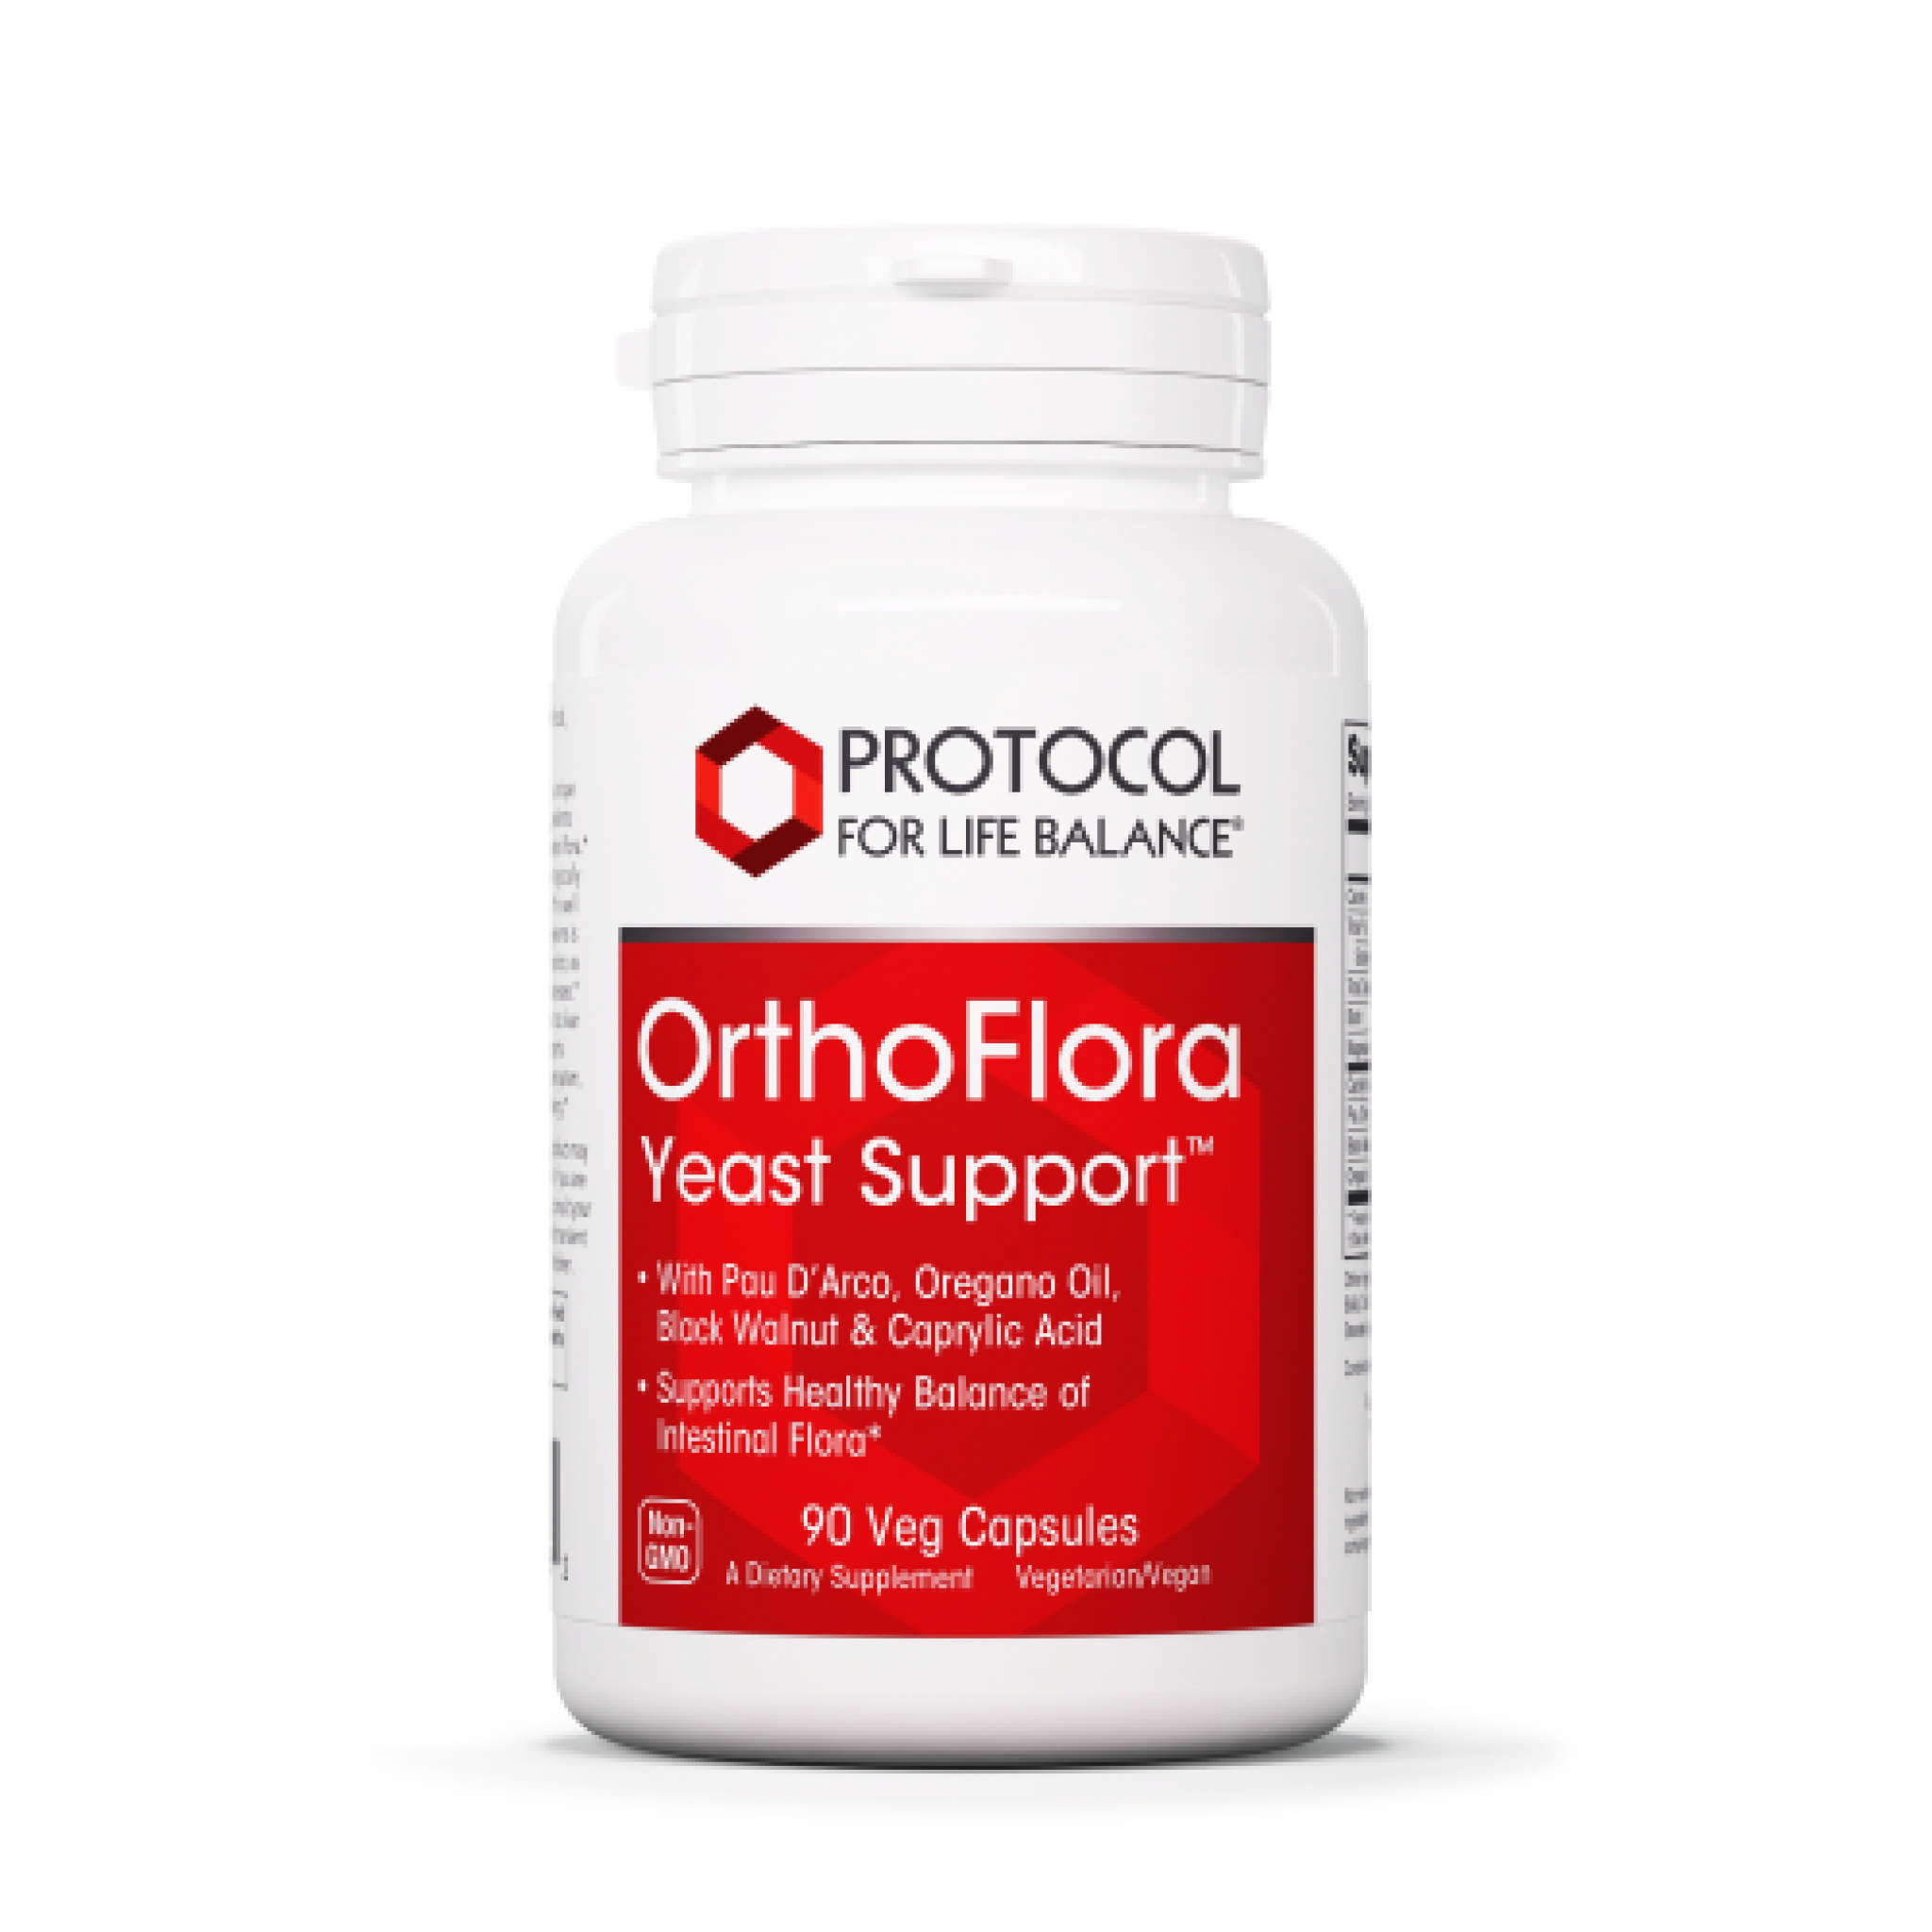 Protocol For Life Balance - Orthoflora Yeast Support